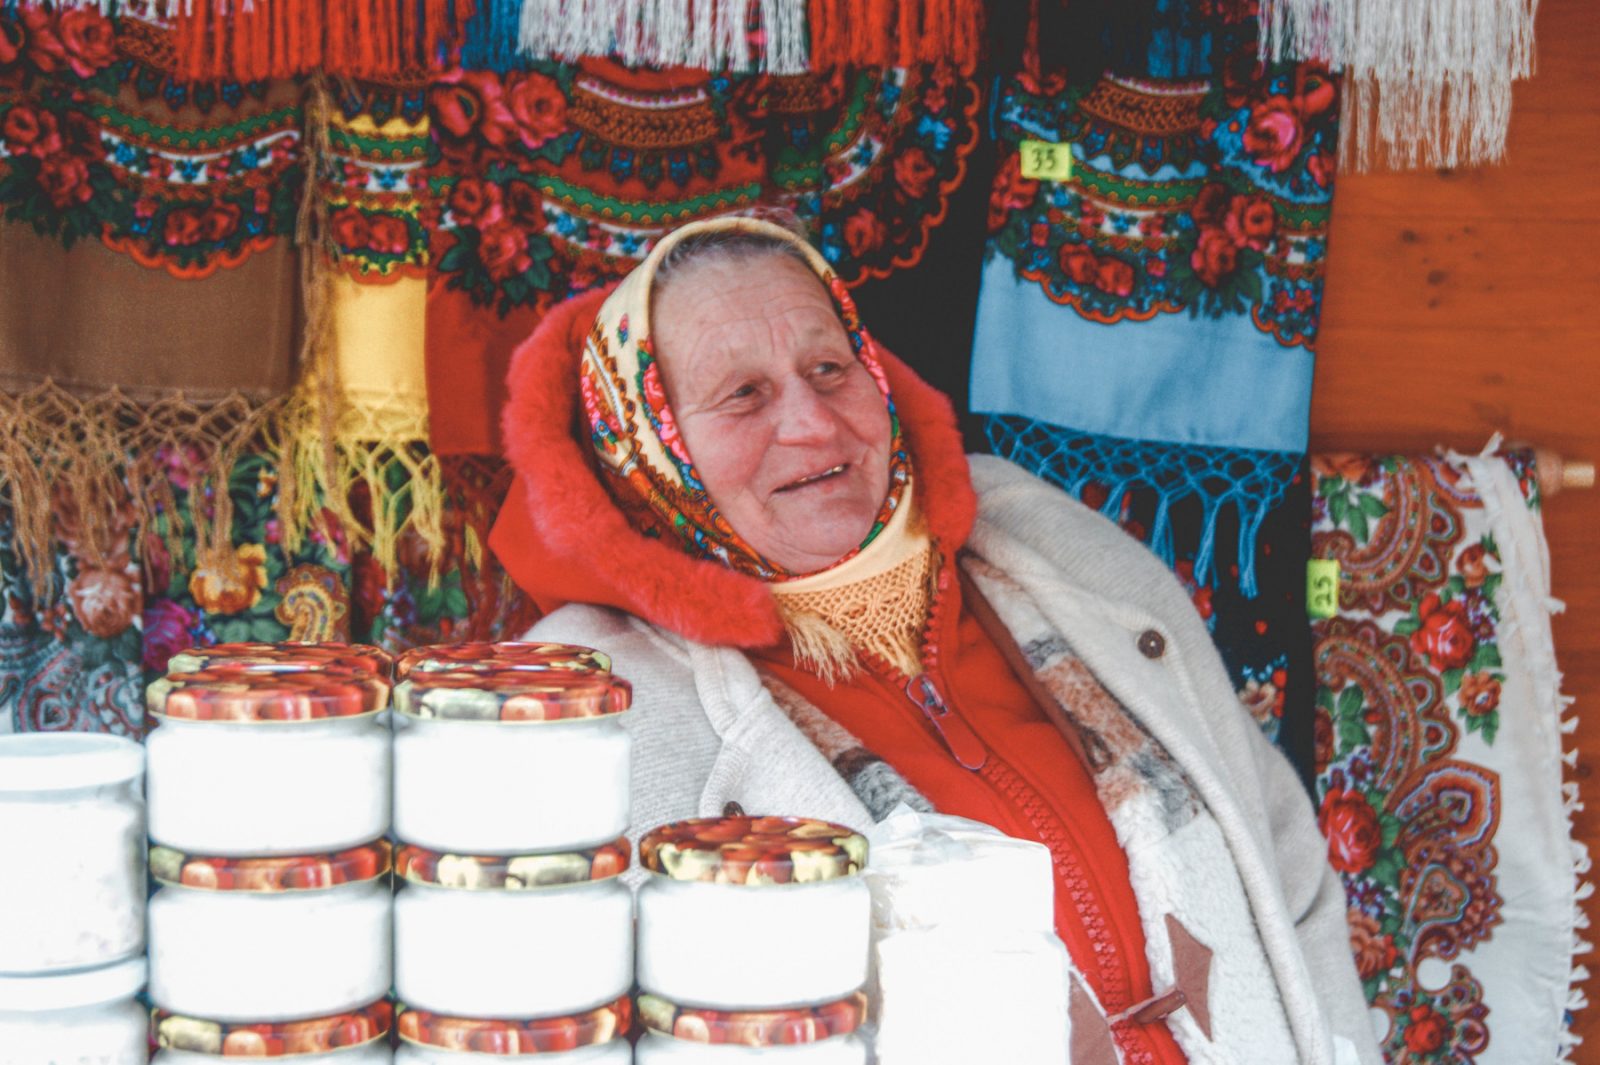 A local lady selling Polish goods in Zakopane